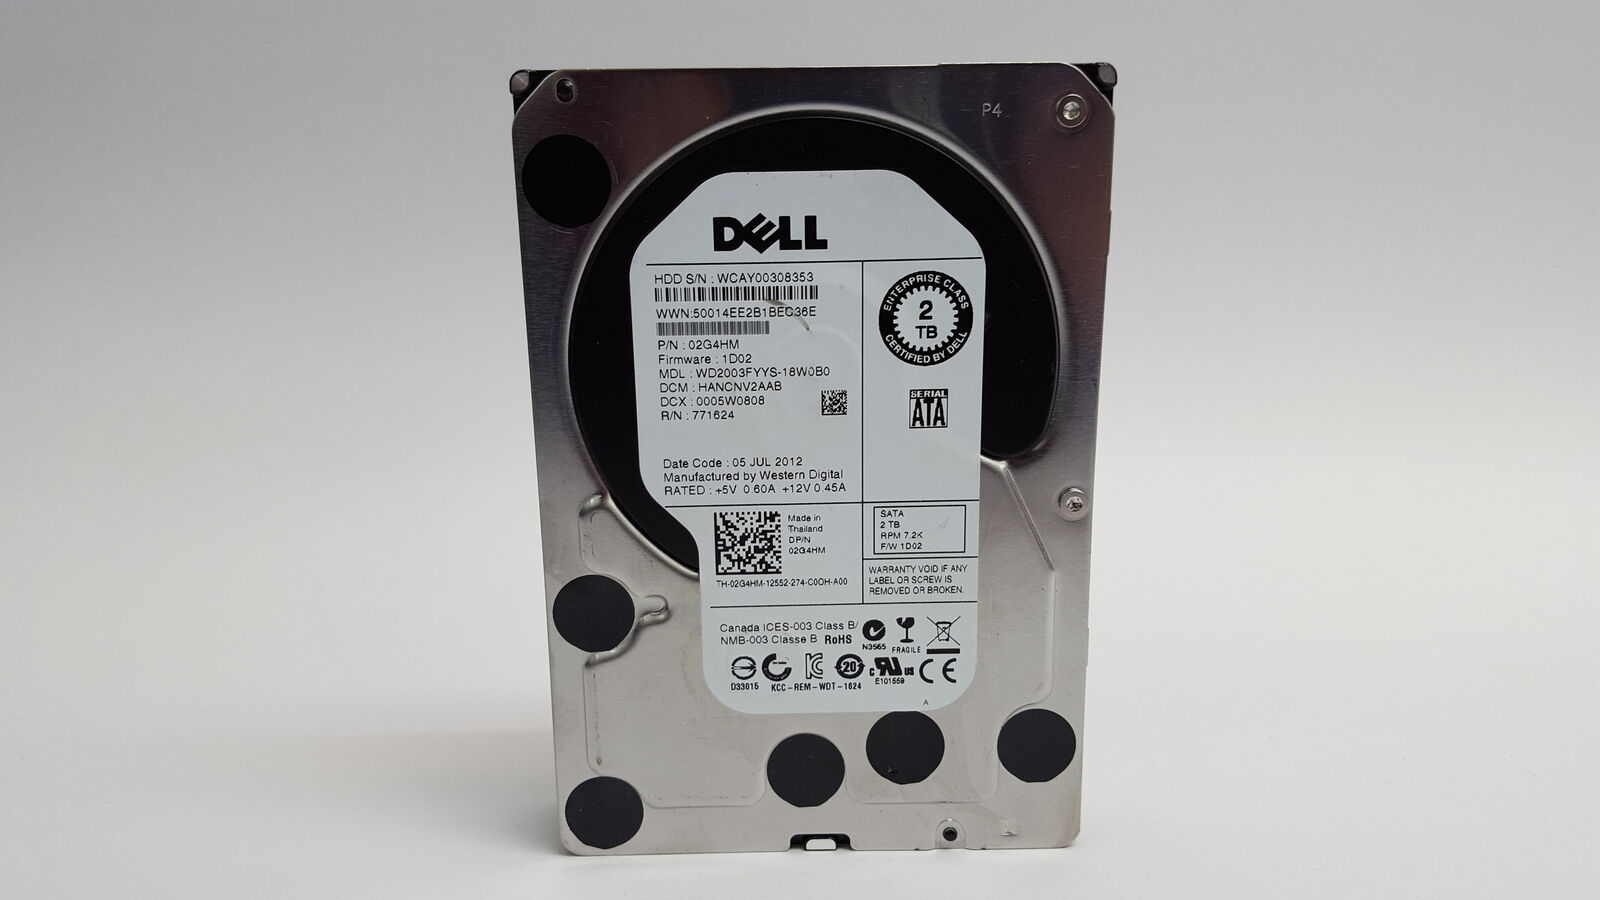 Western Digital Dell WD2003FYYS 2 TB 3.5 in SATA II Enterprise Drive